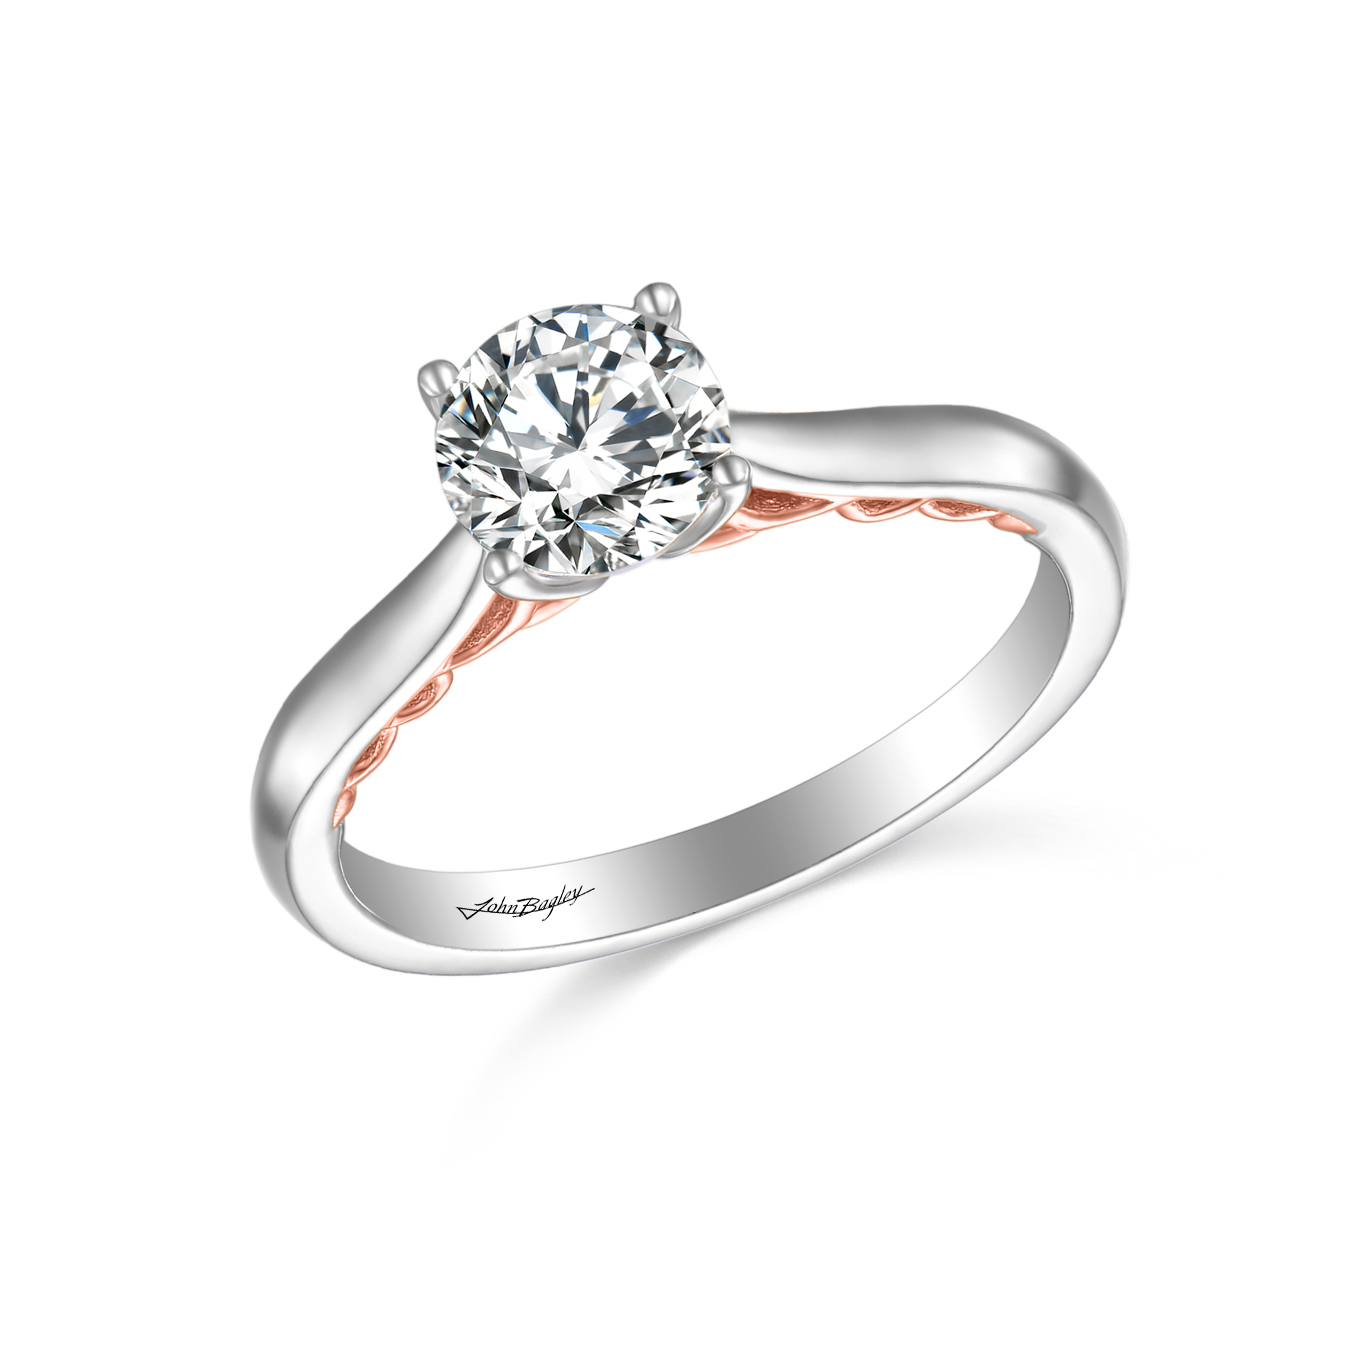 White/Rose Engagement Ring